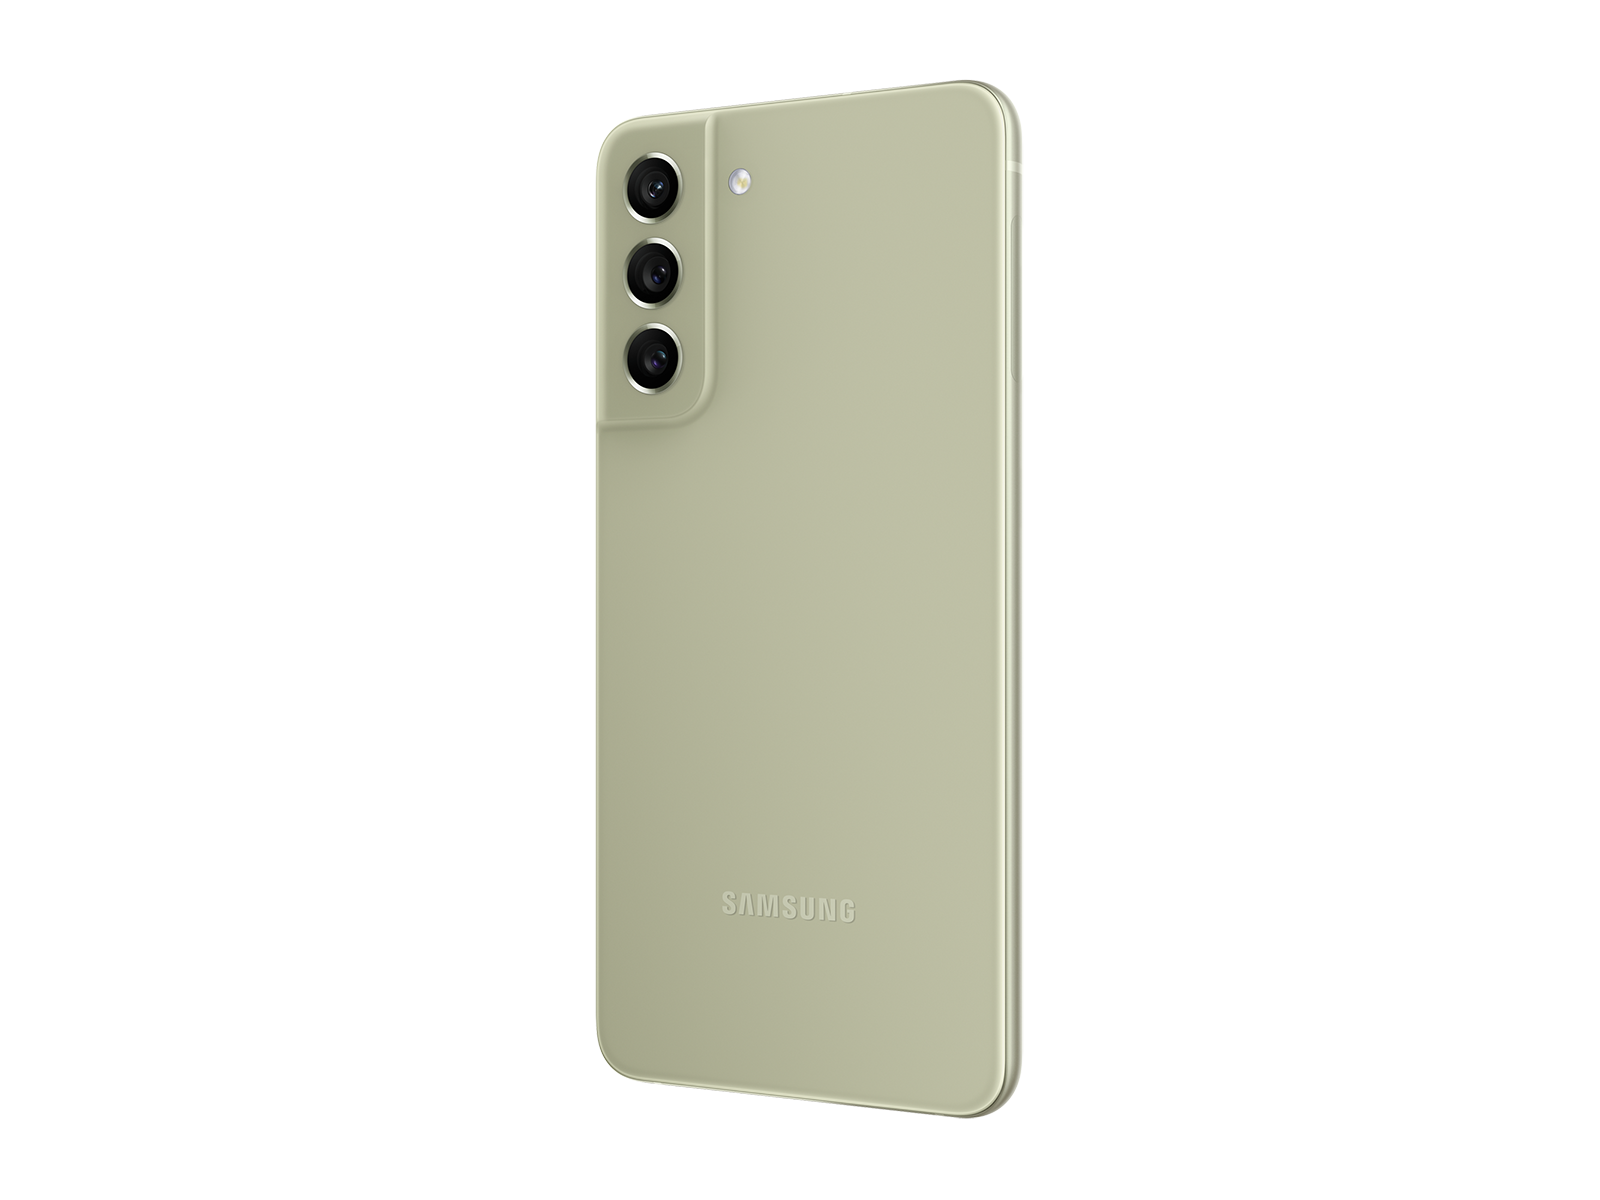 Thumbnail image of Galaxy S21 FE 5G, 256GB (Unlocked)